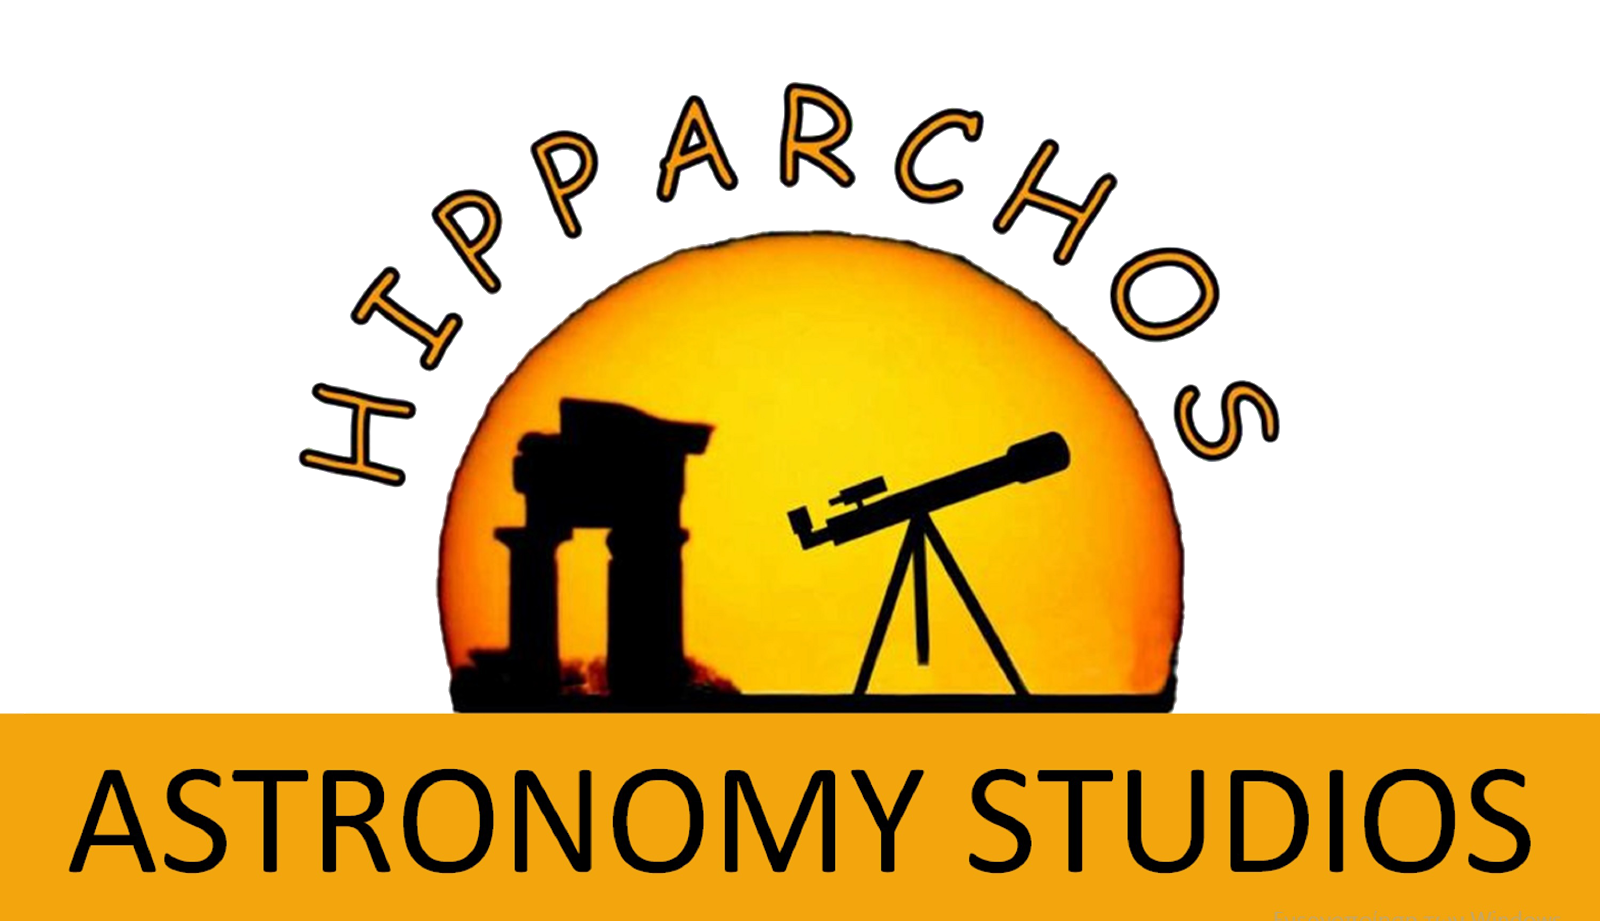 Astronomy Studios Hipparchos